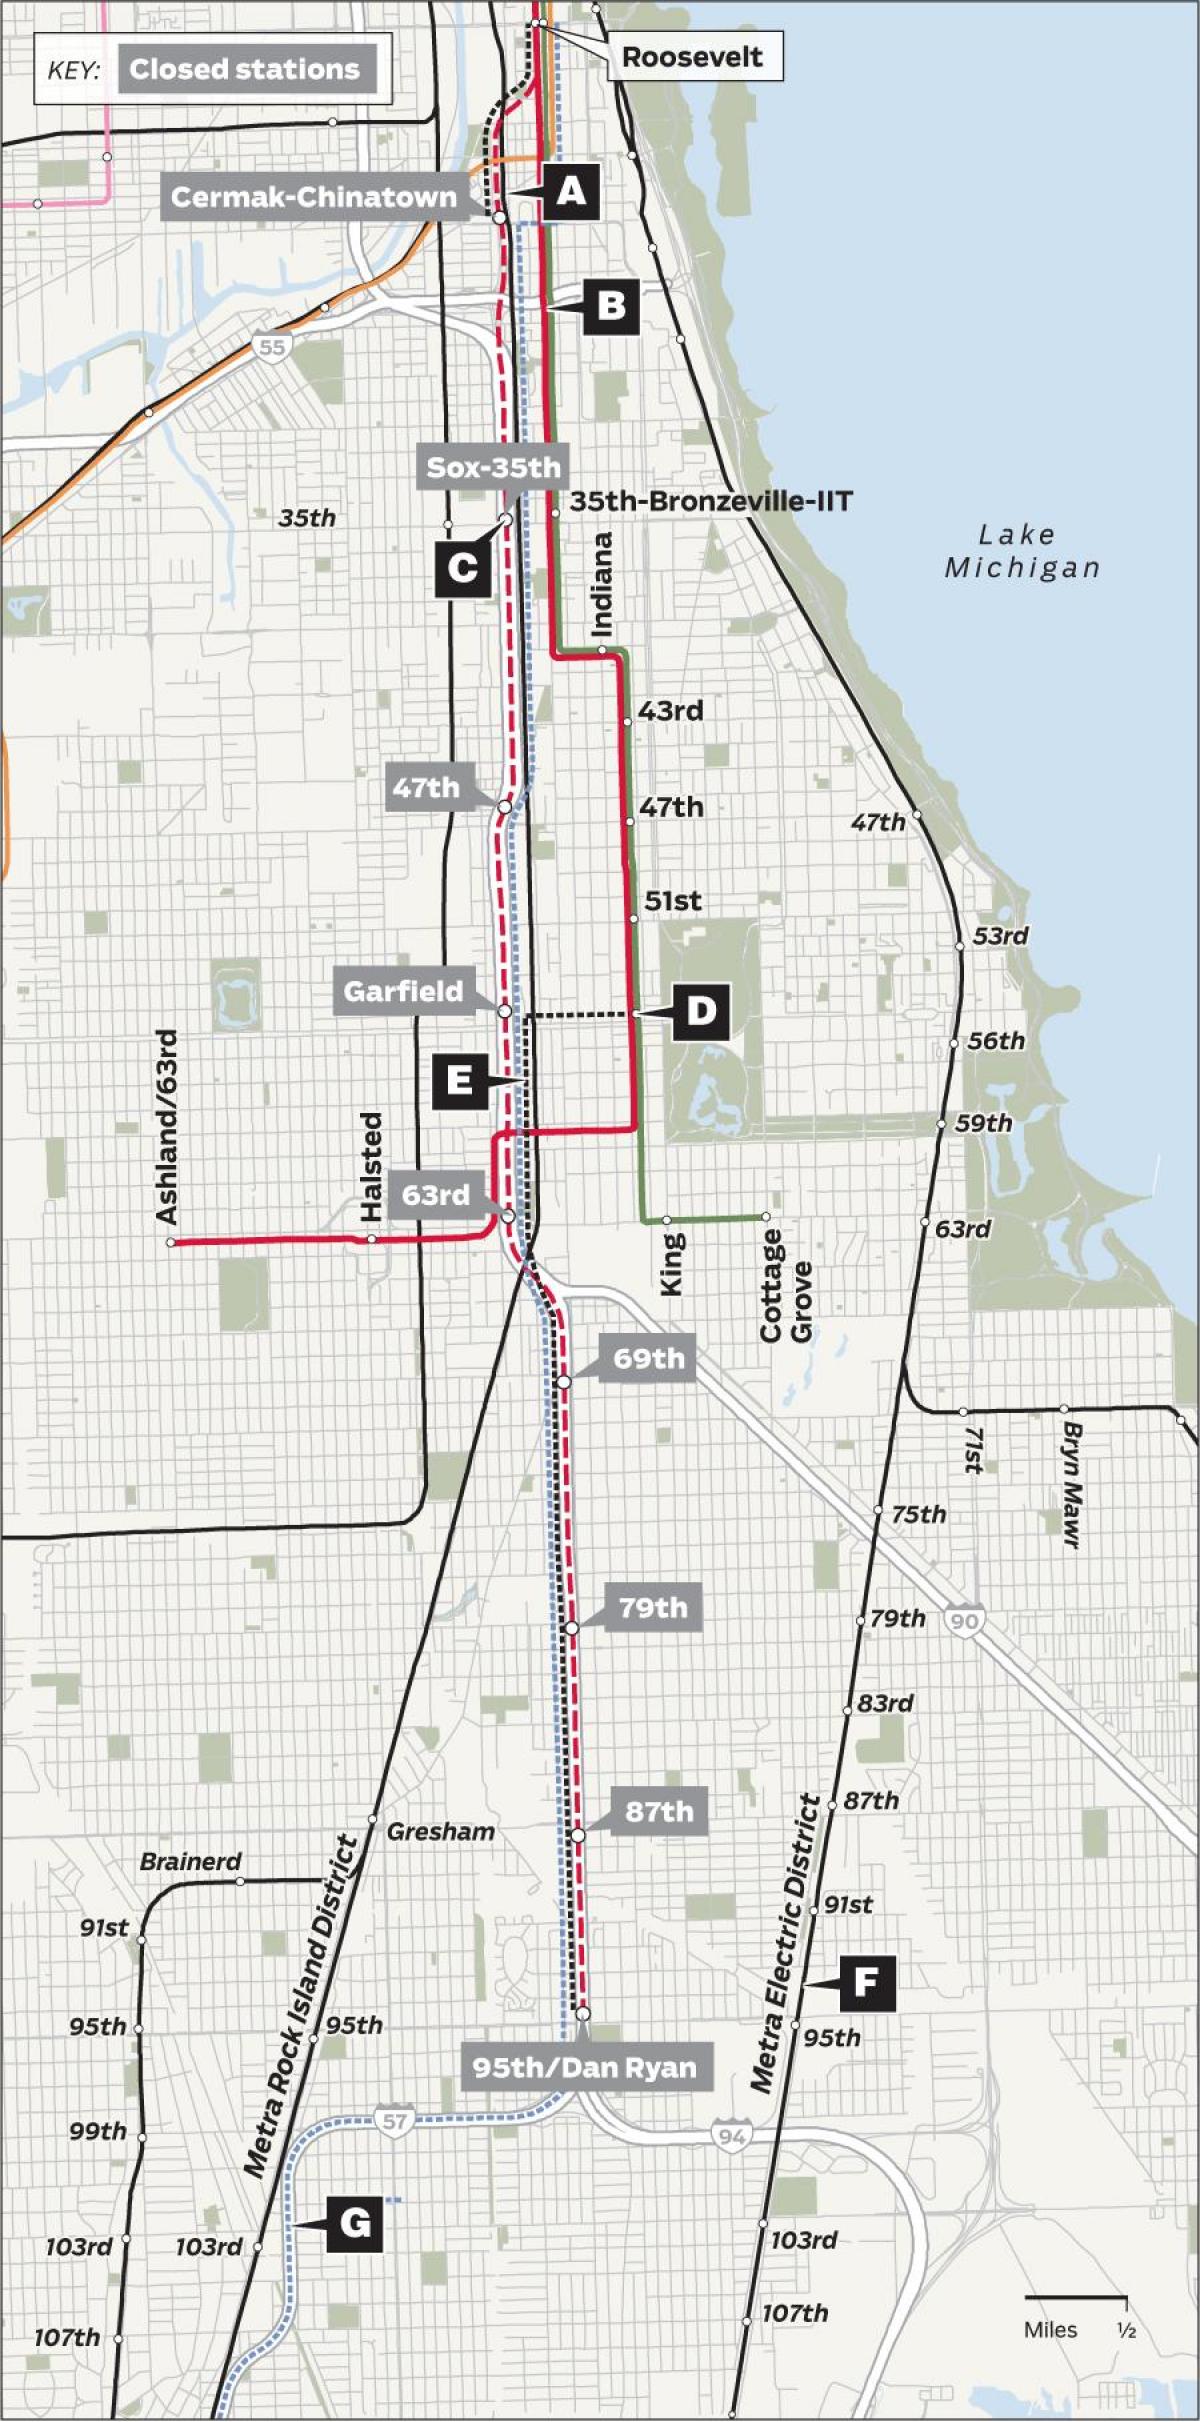 redline Chicago mapu